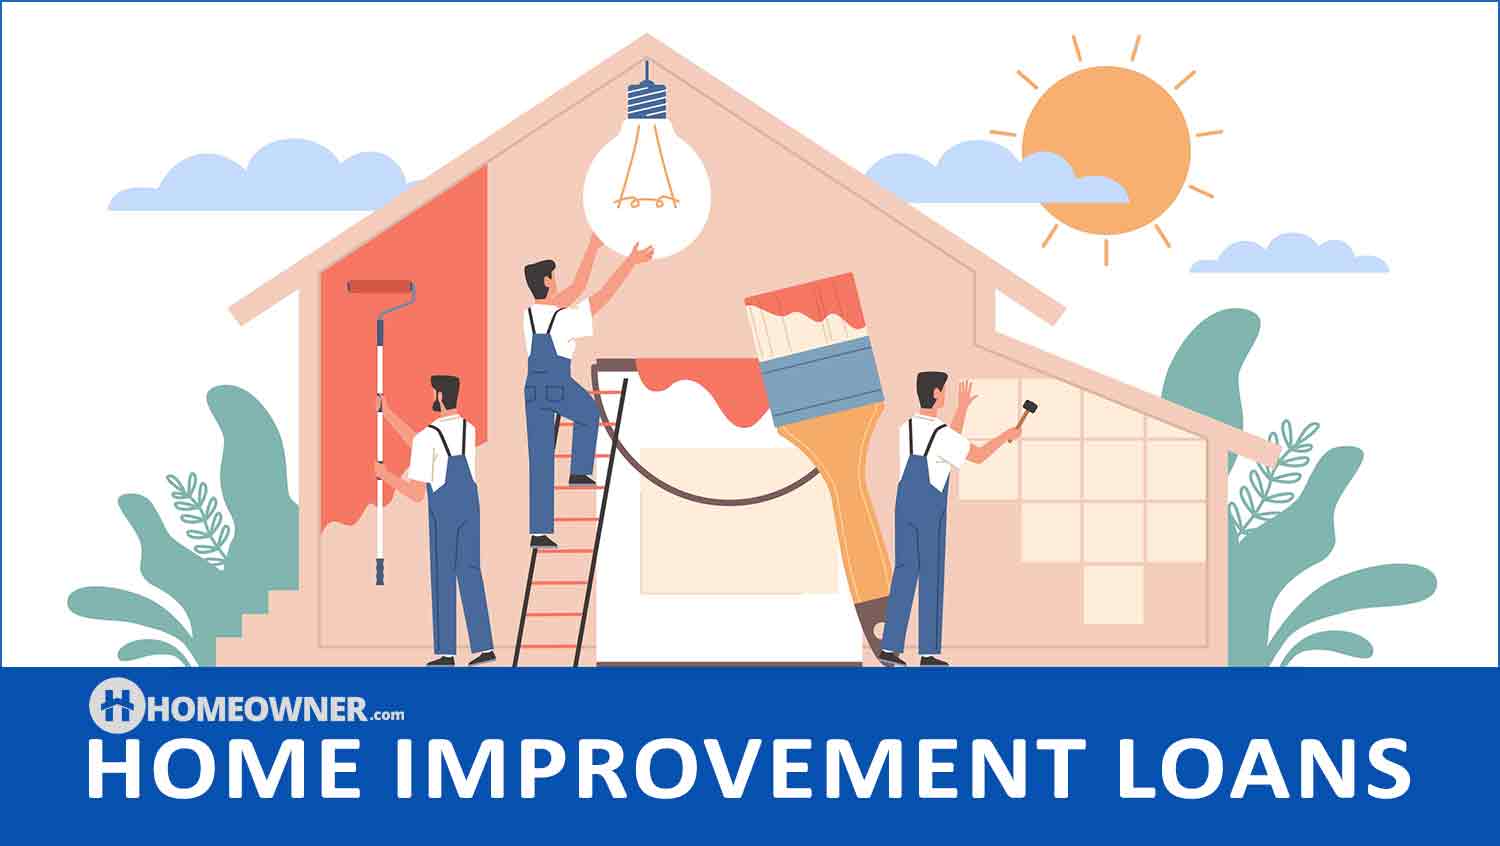 How Do Home Improvement Loans Work?